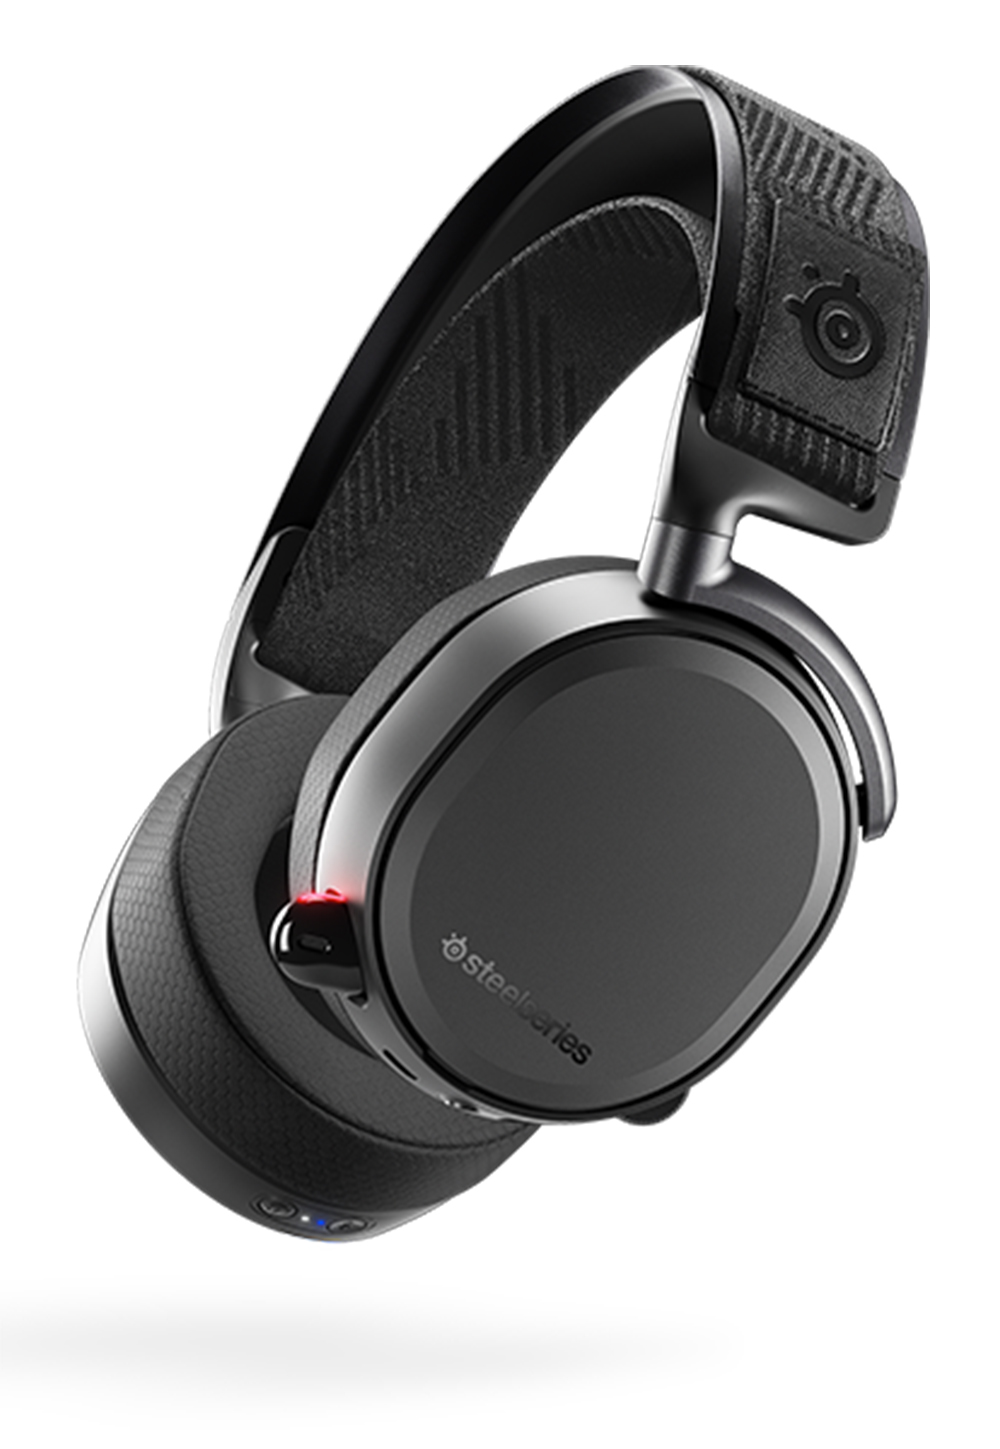 Steelseries Arctis Pro Wireless Gaming Headset - Black